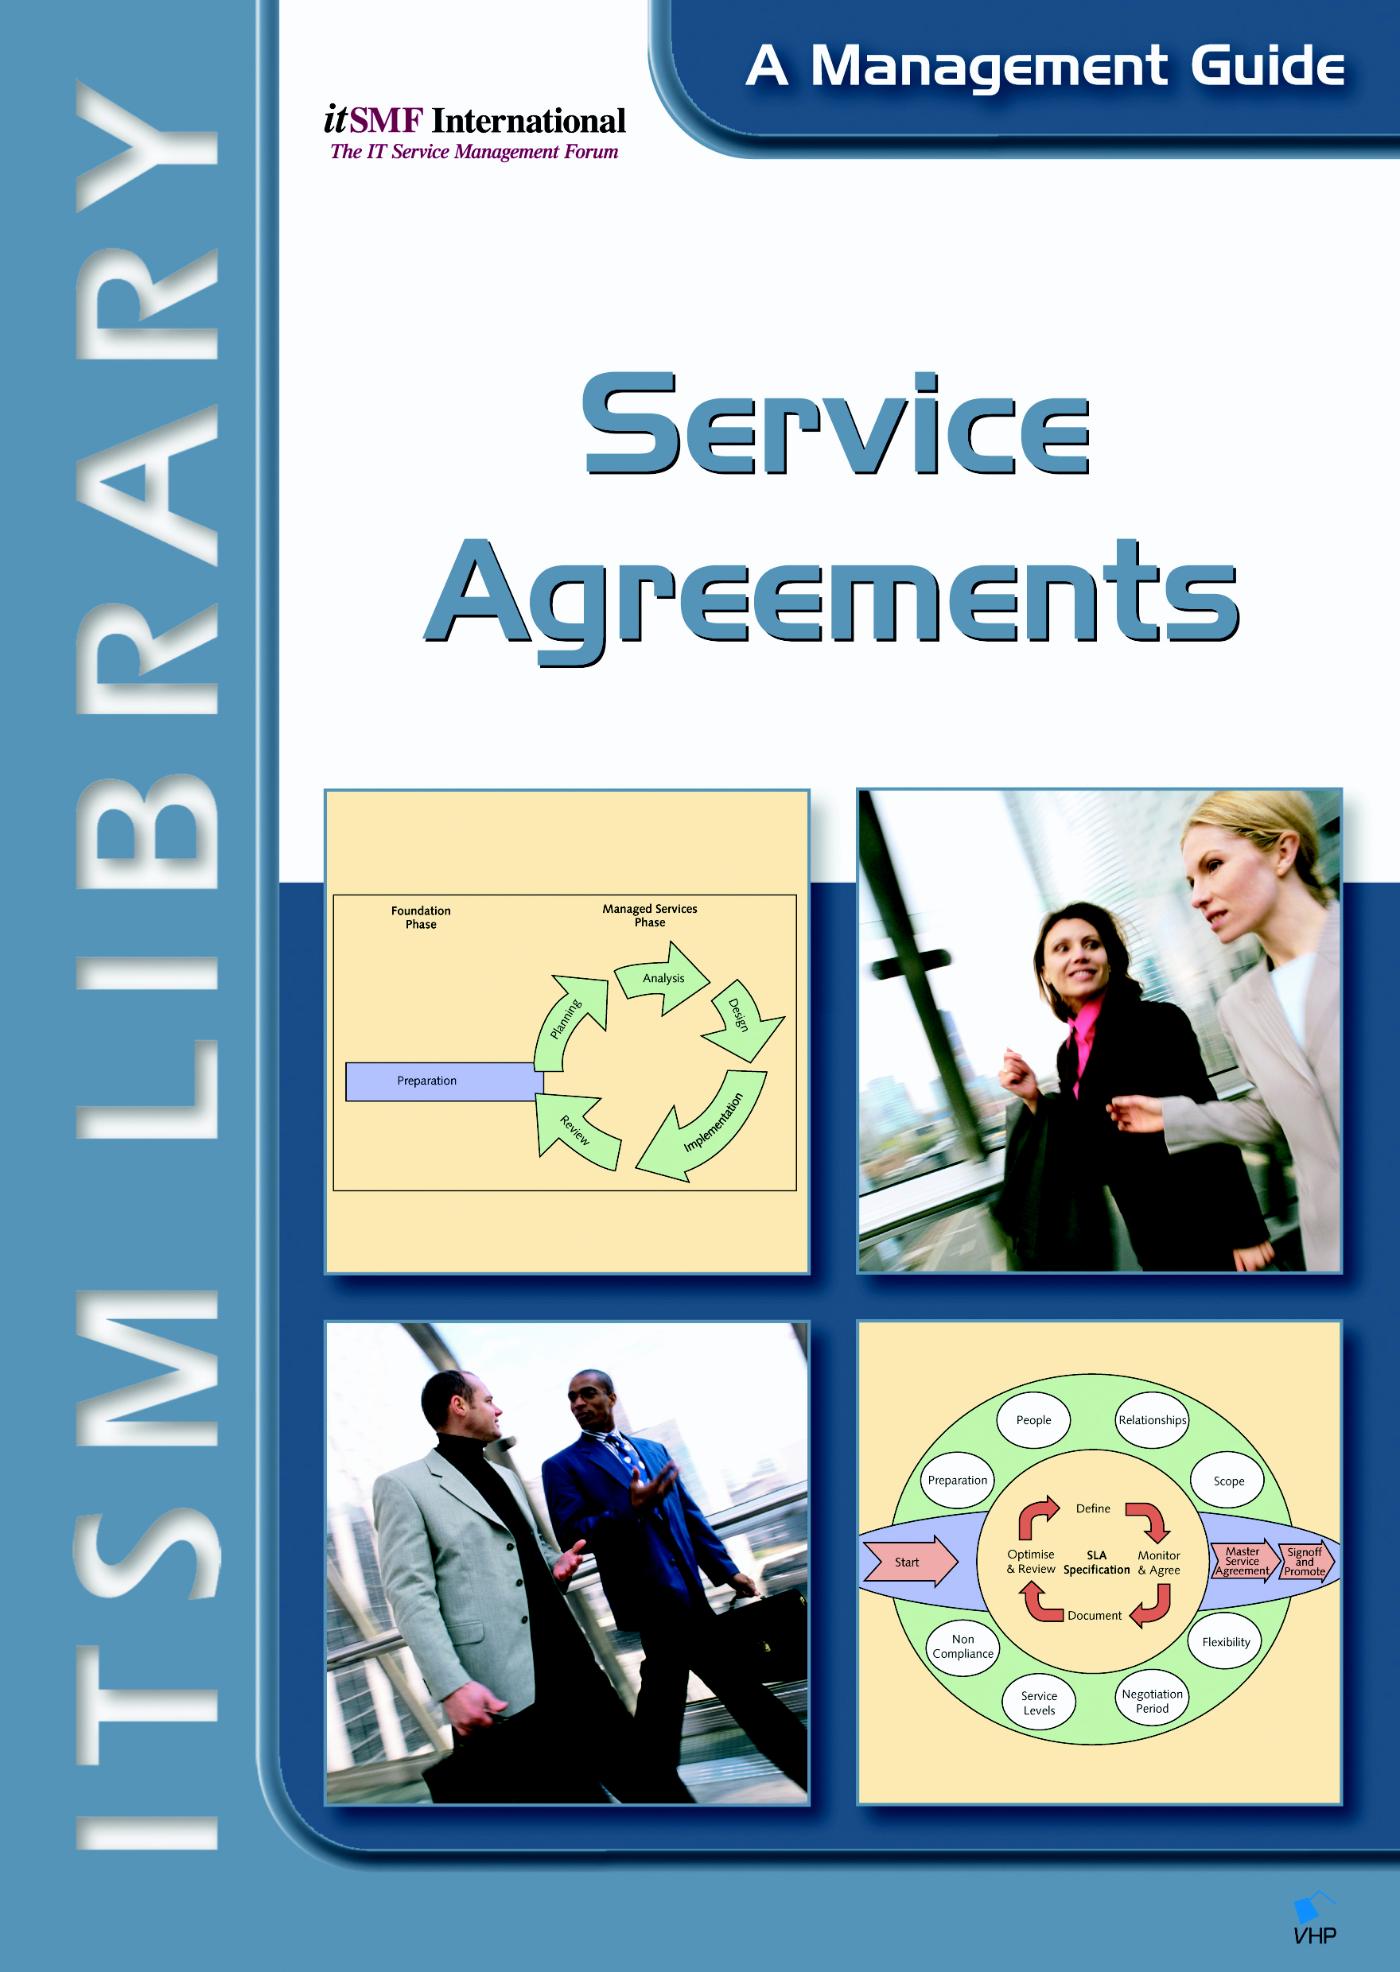 Service Agreements / deel a management guide